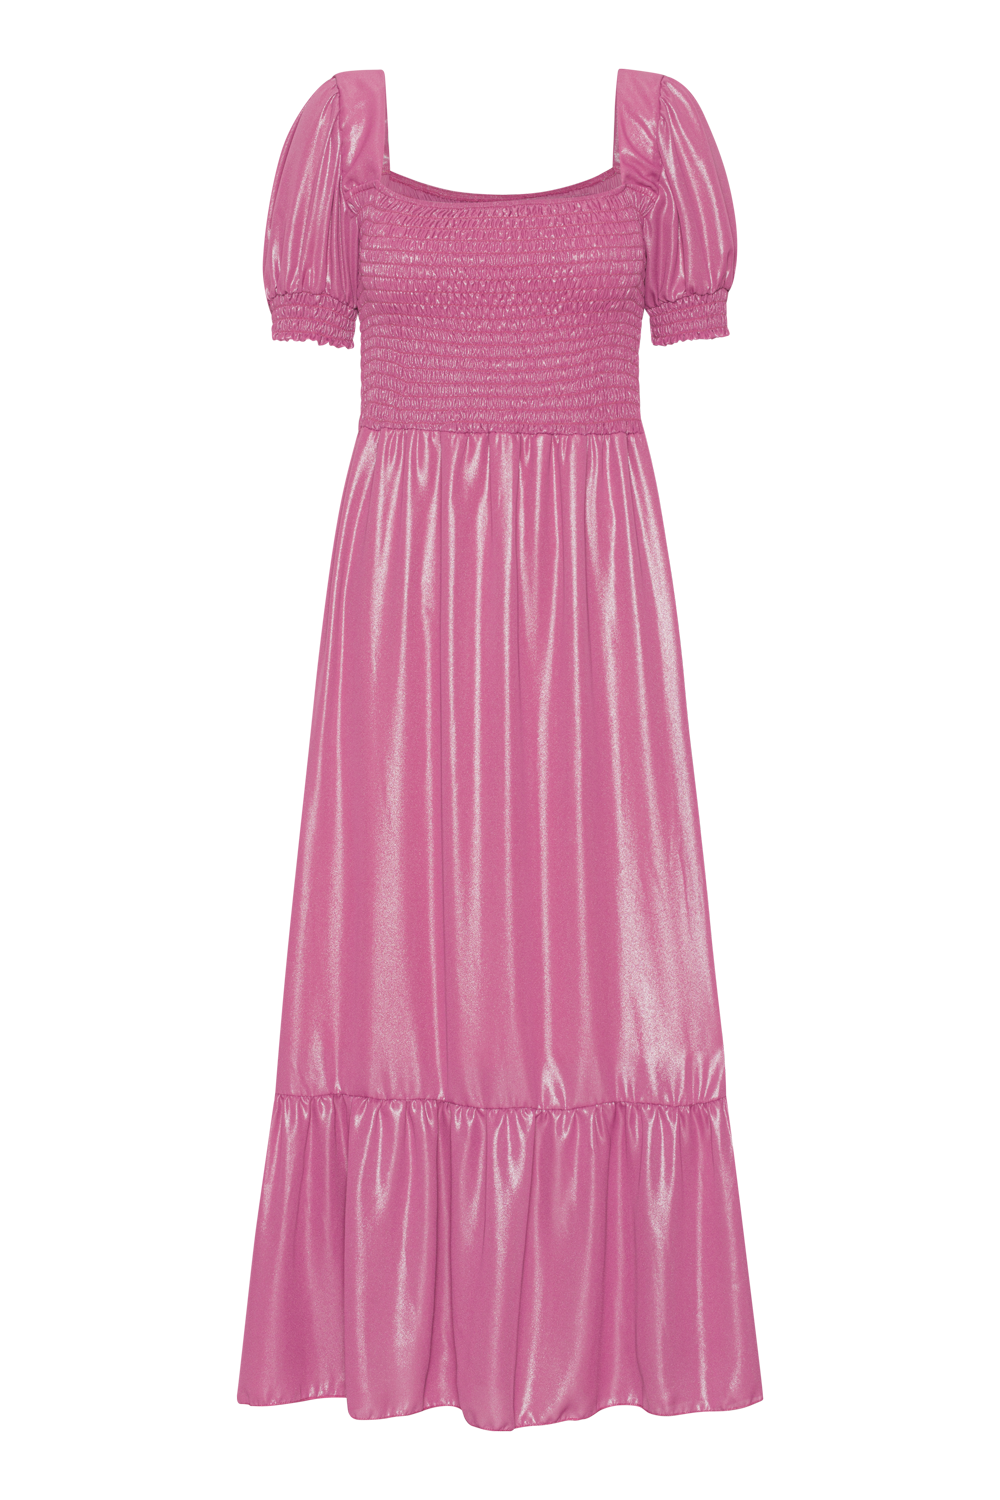 Jade Shimmer Long Dress Pink - Sample